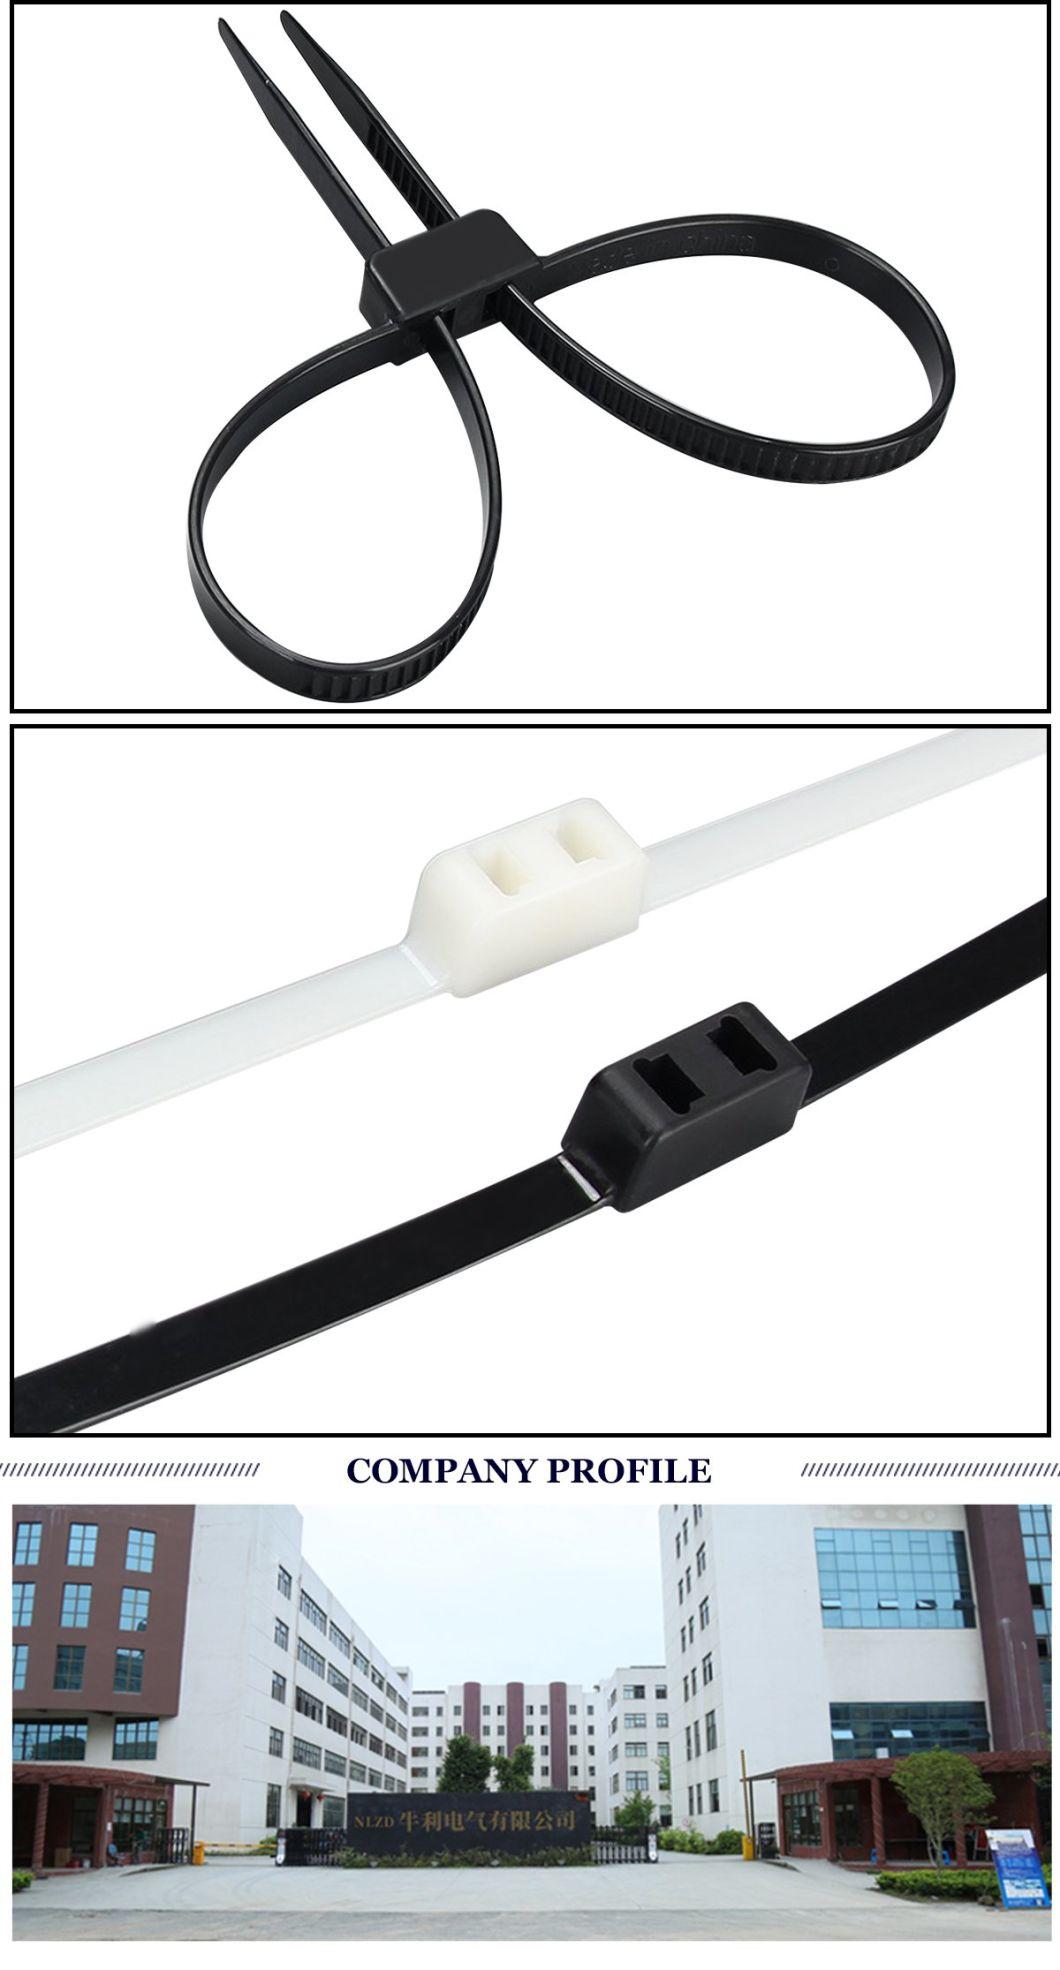 13*880 Nylon 66 Heavy Duty Plastic Handcuff Cable Ties